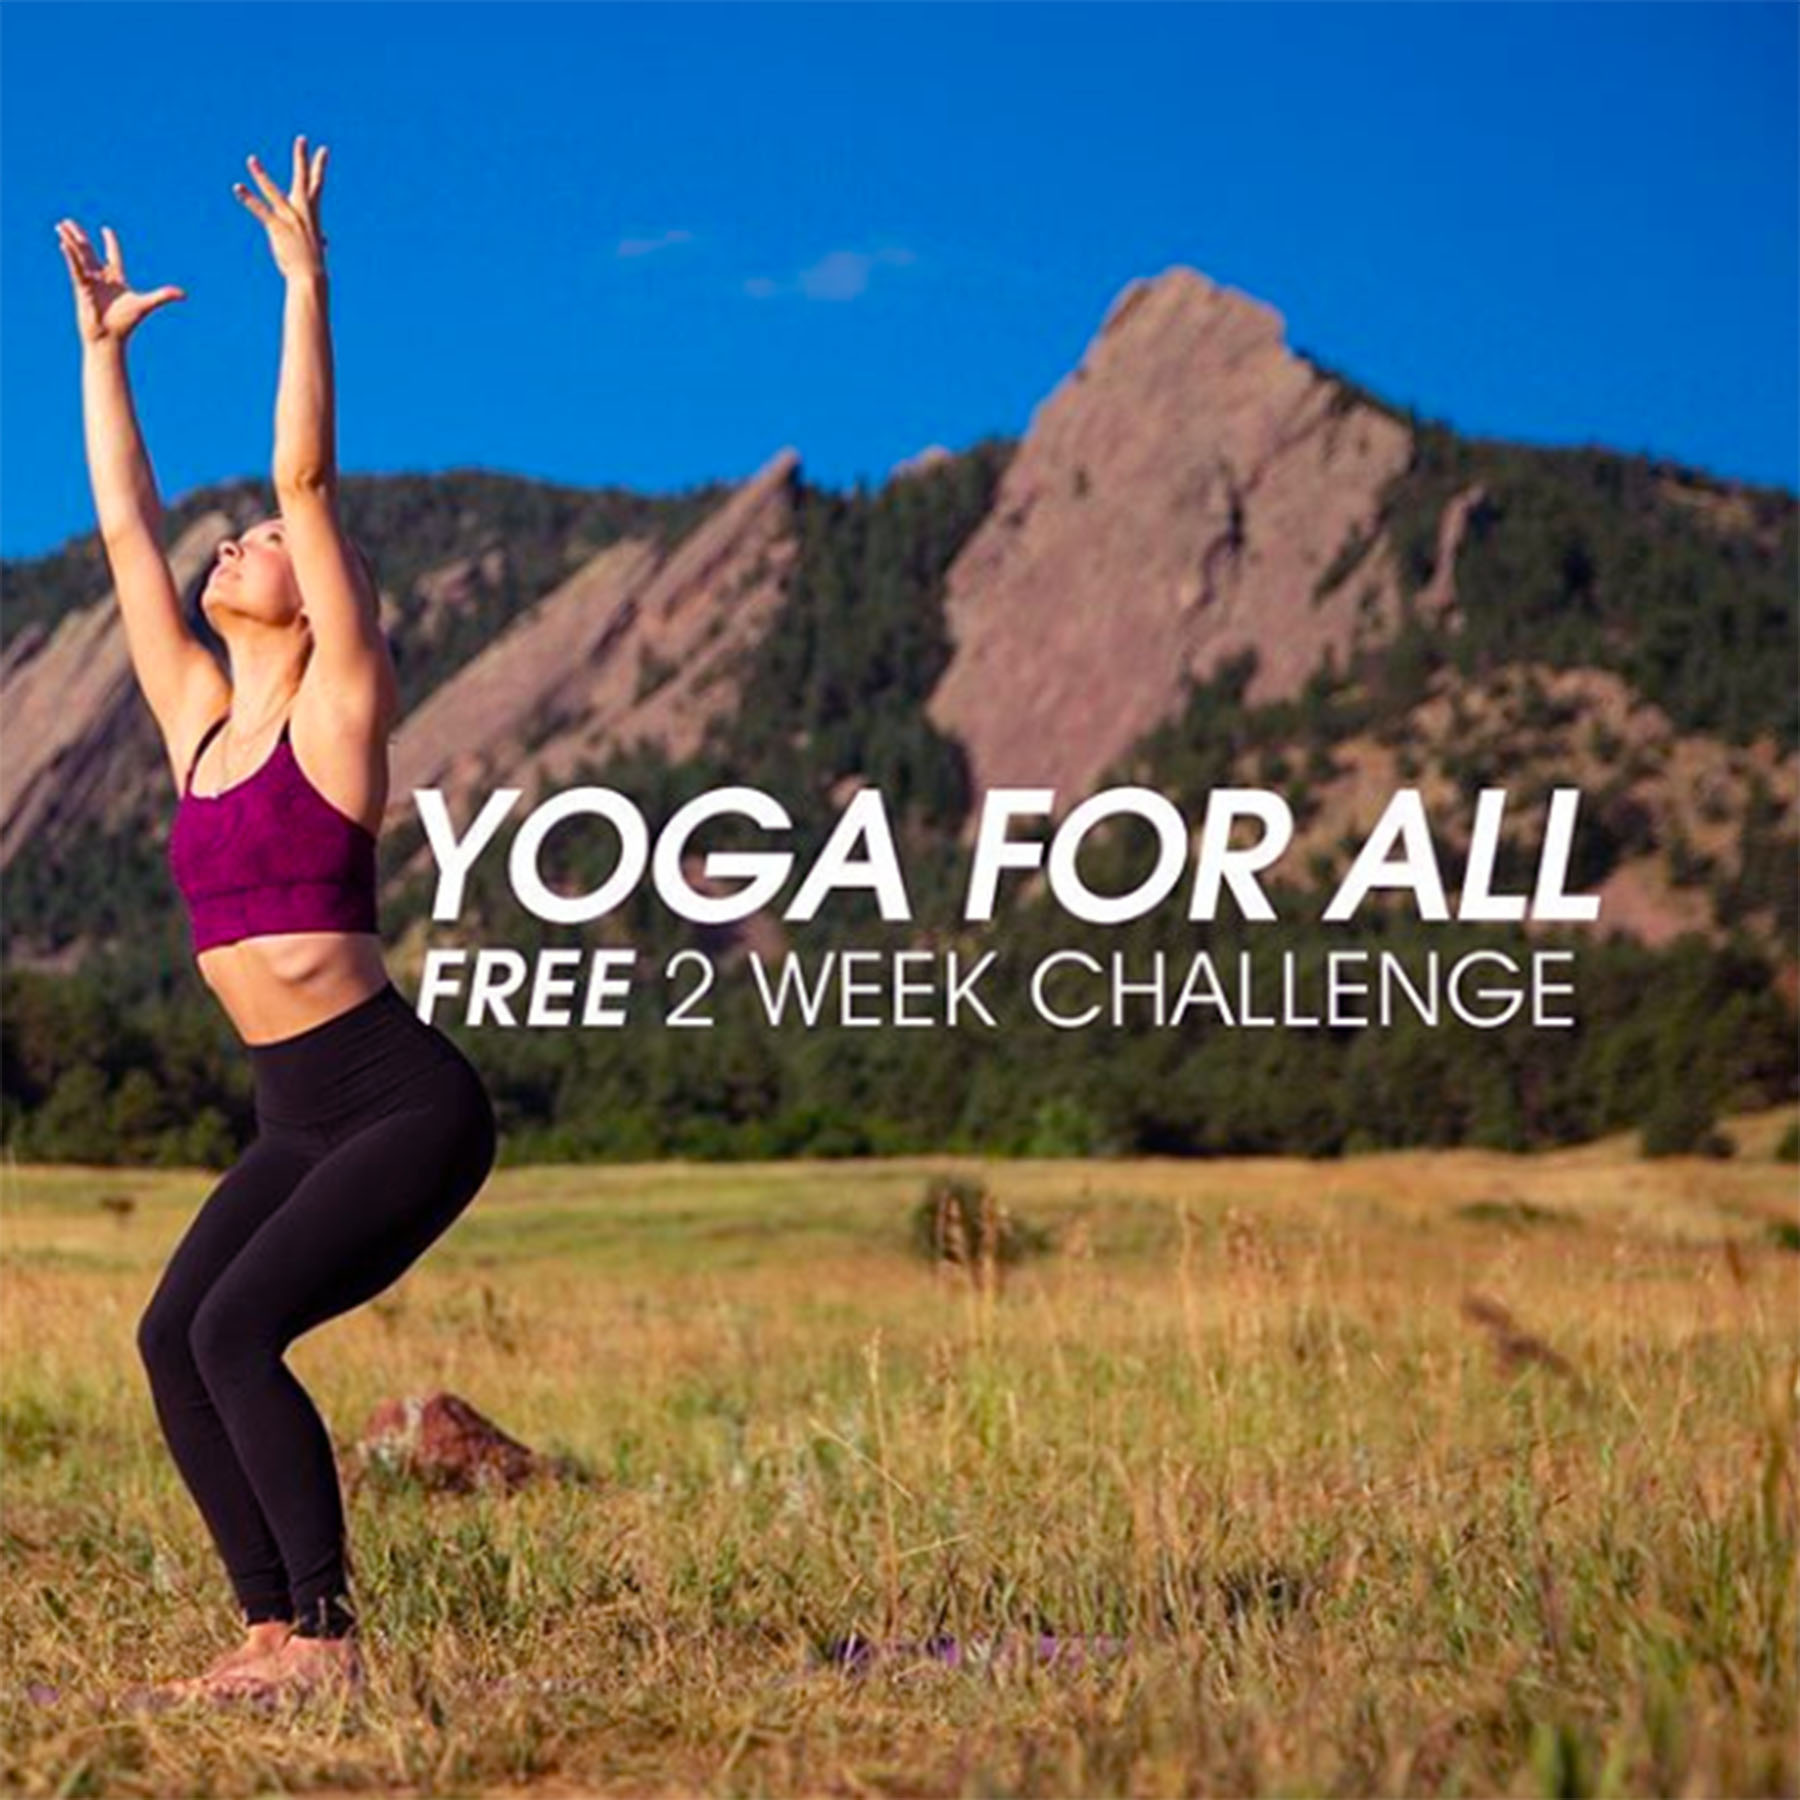 4 Benefits of Doing a Yoga Challenge